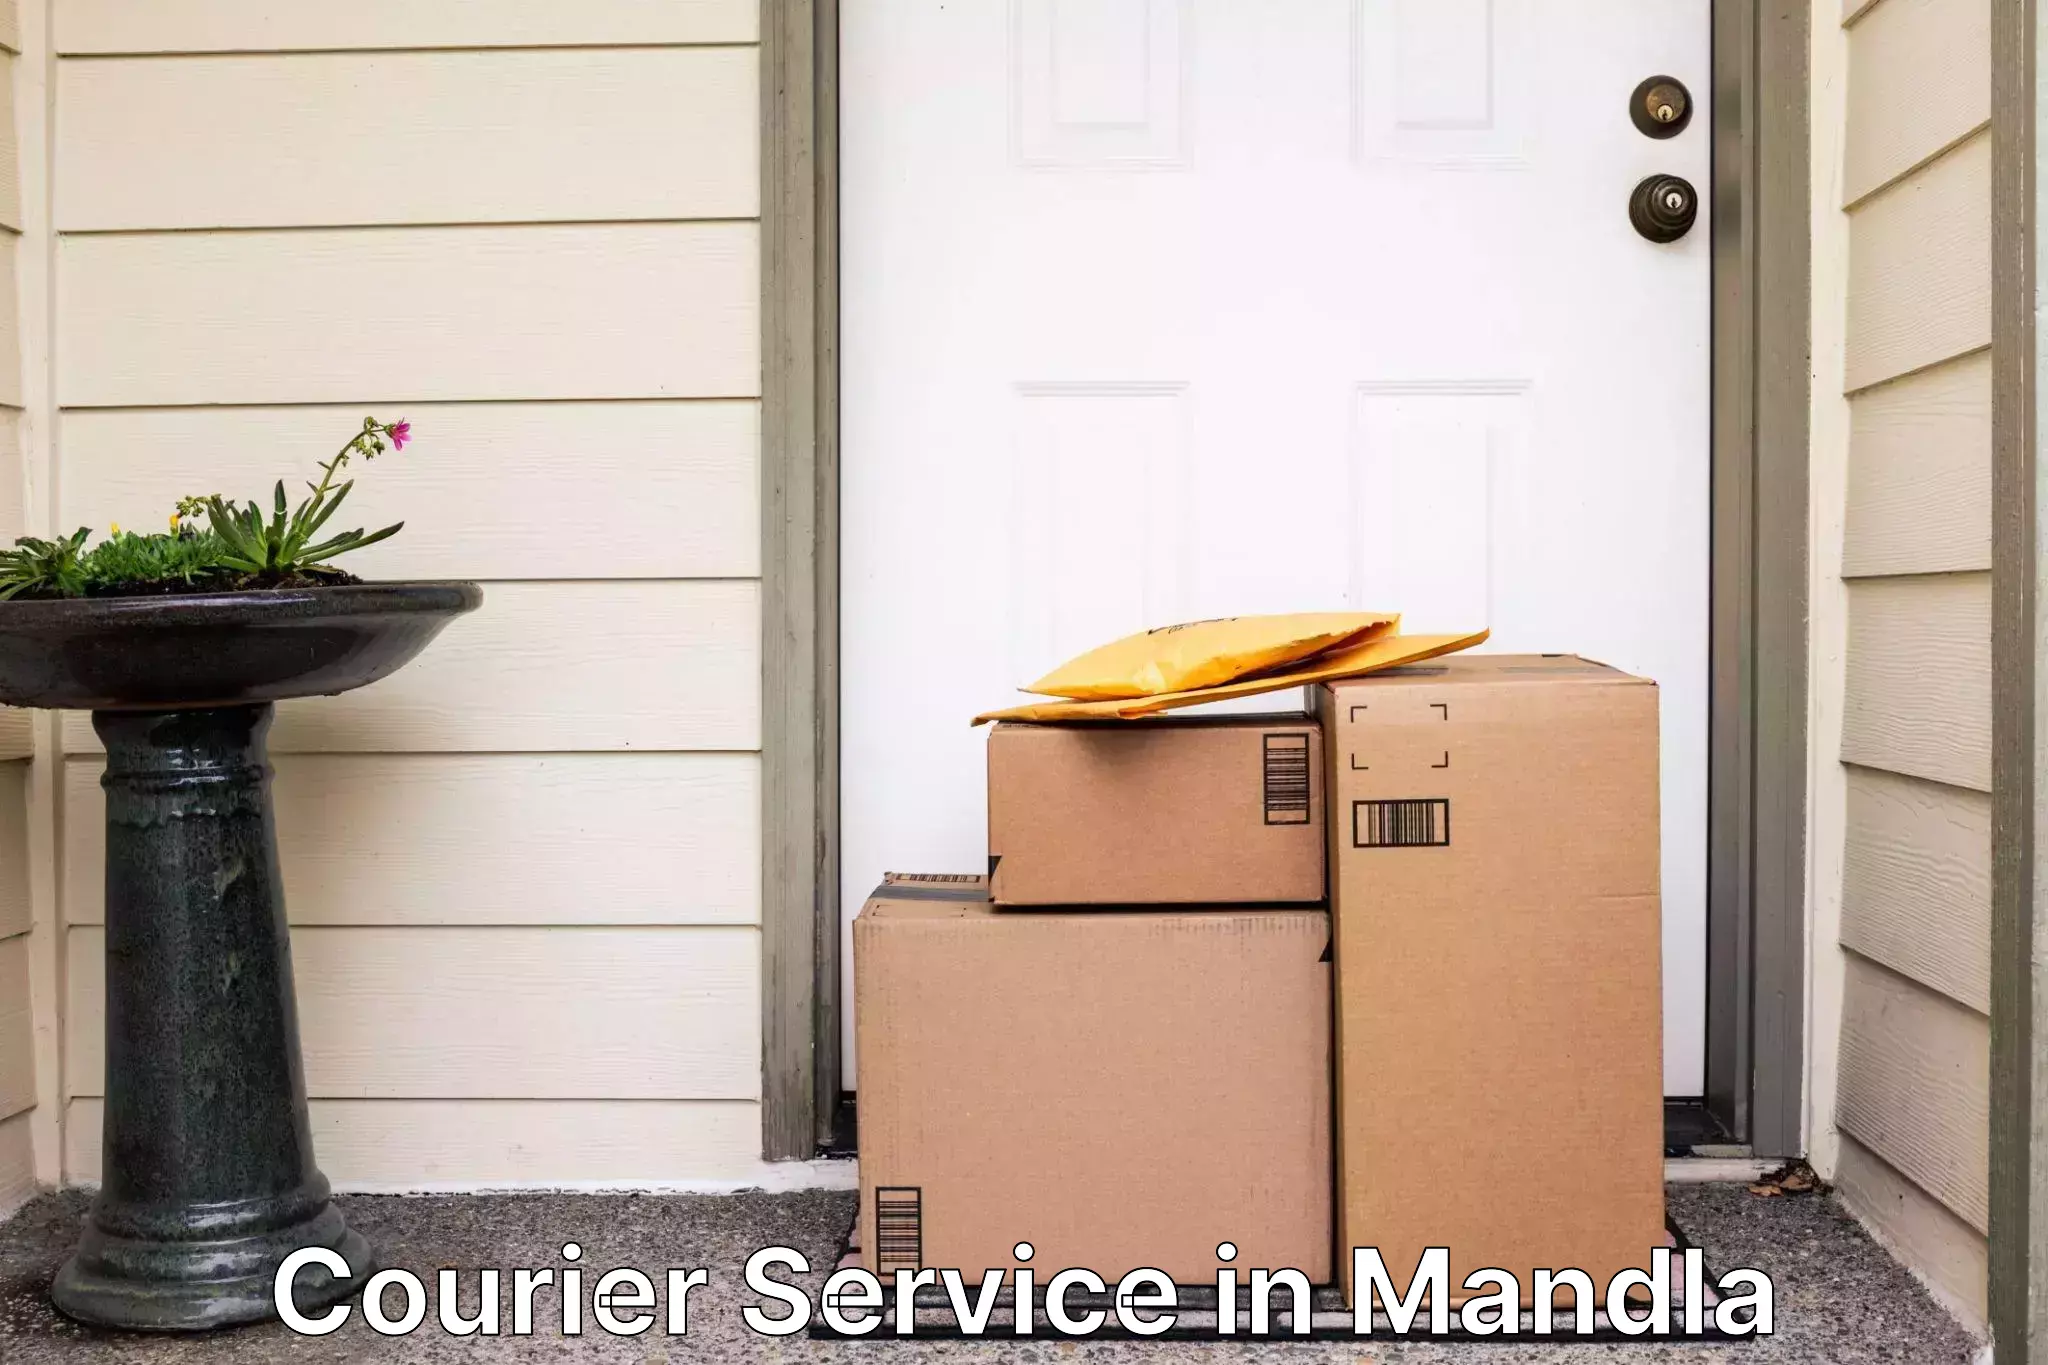 Cargo delivery service in Mandla